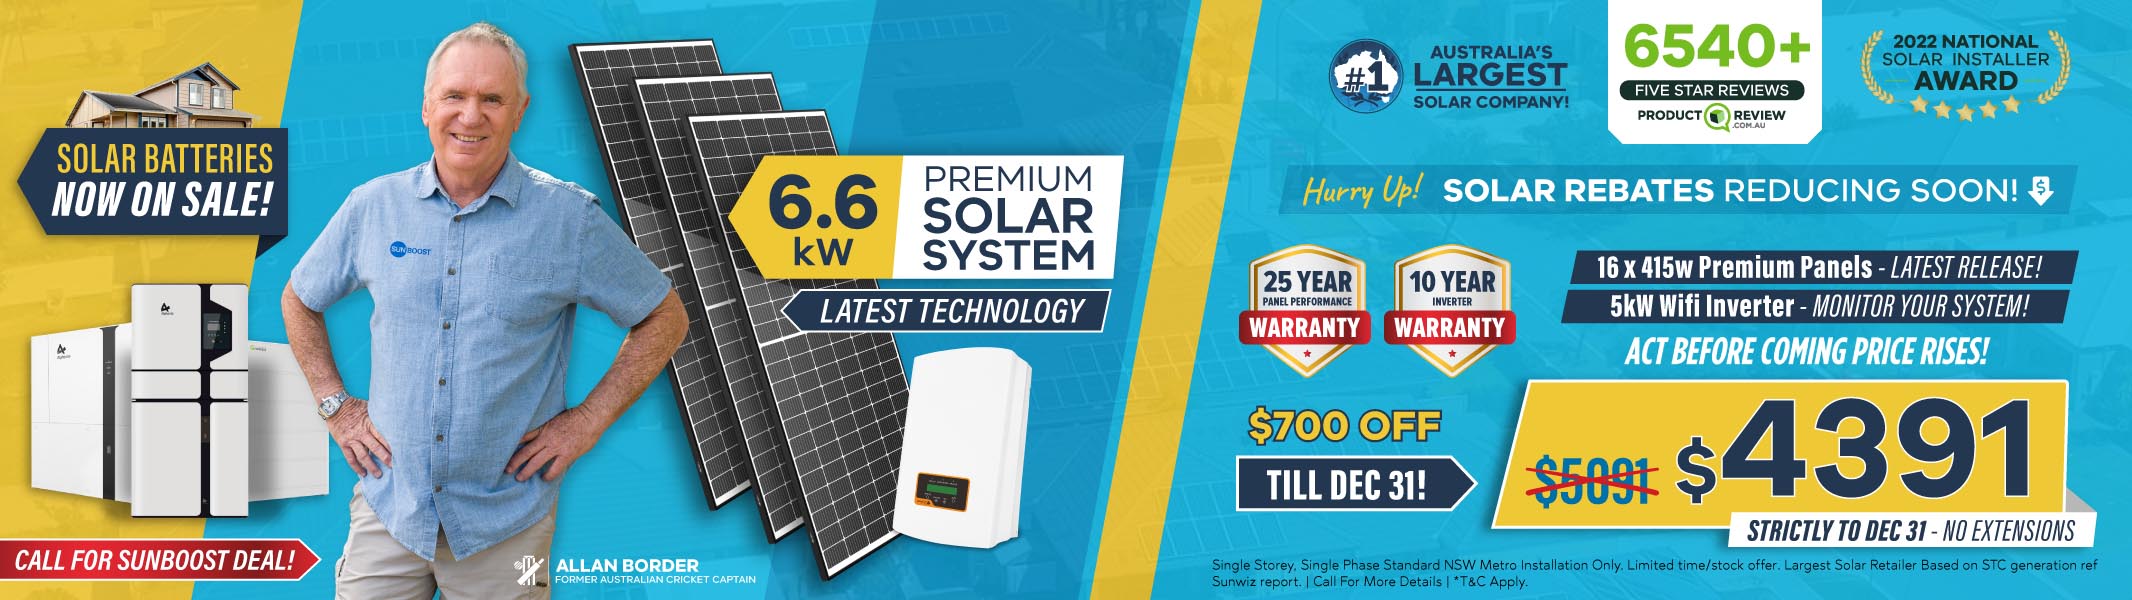 highest 5 star reviewed solar provider Sunboost